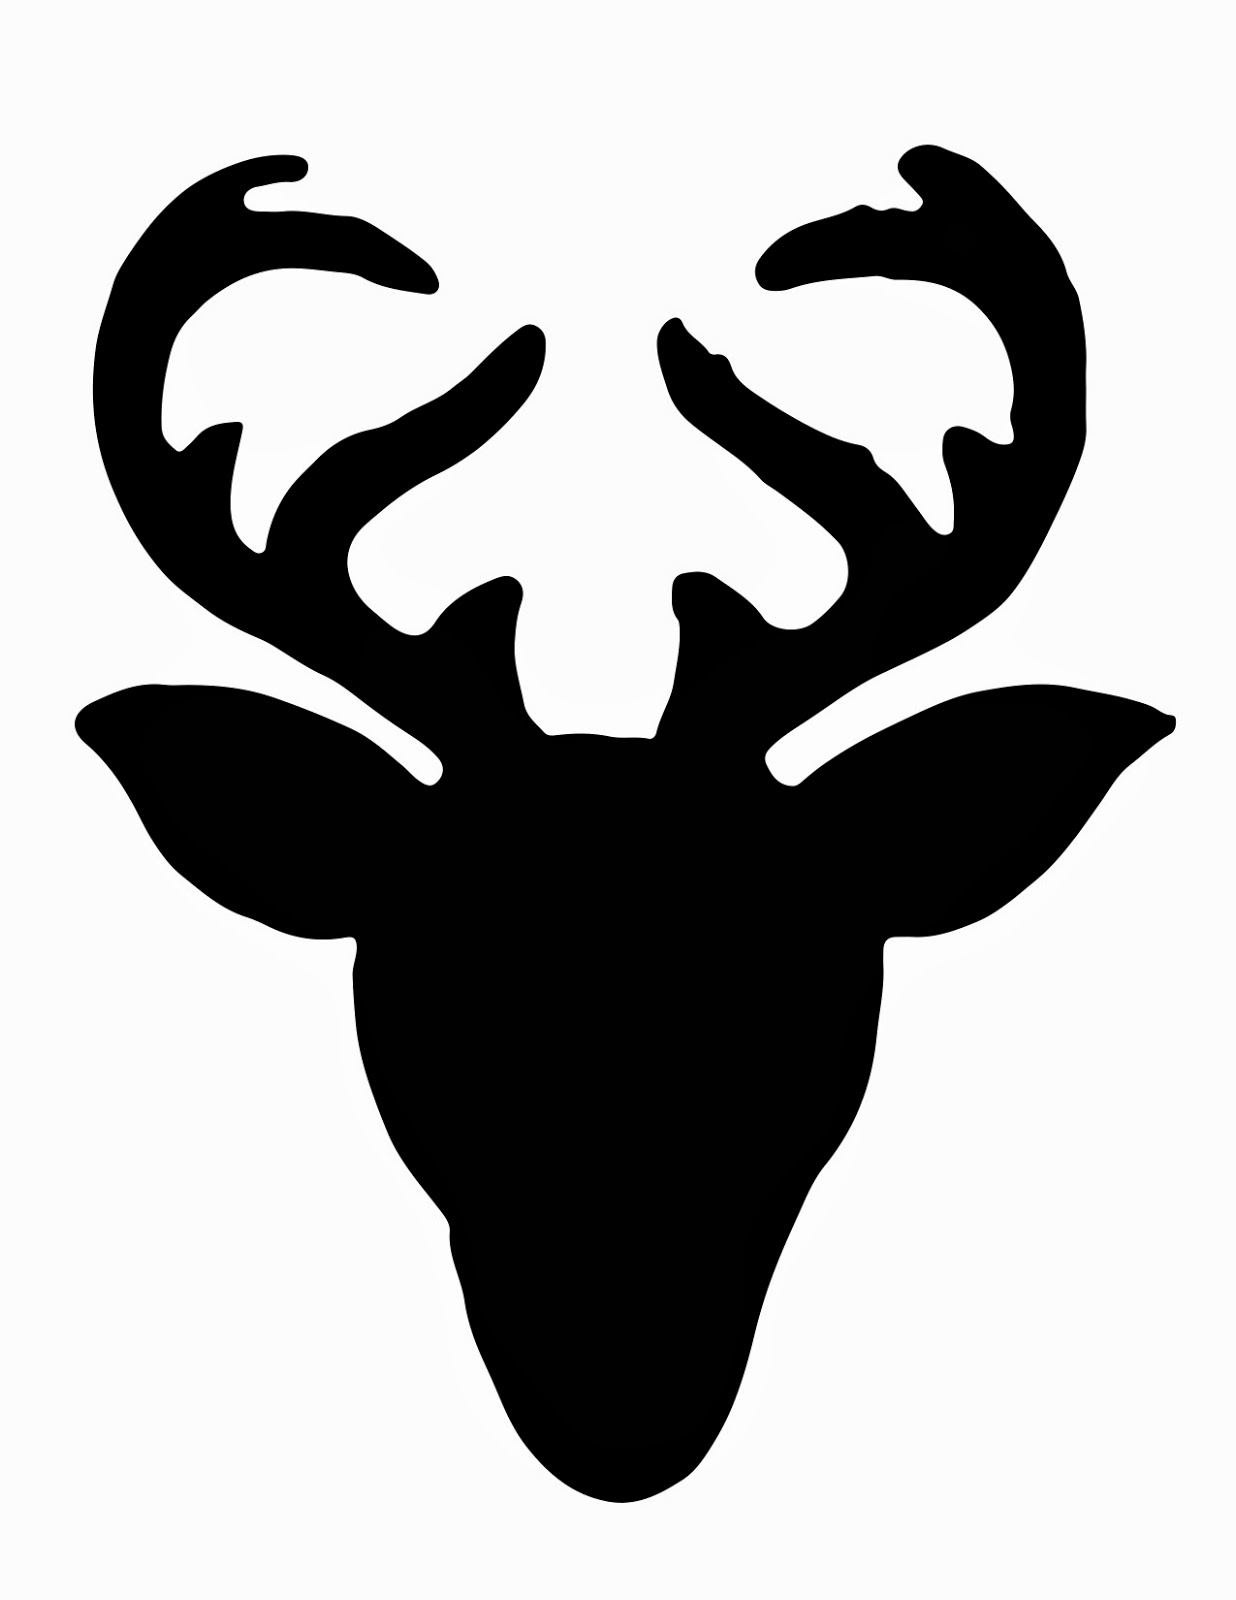 Deer Head Silhouette Stencil